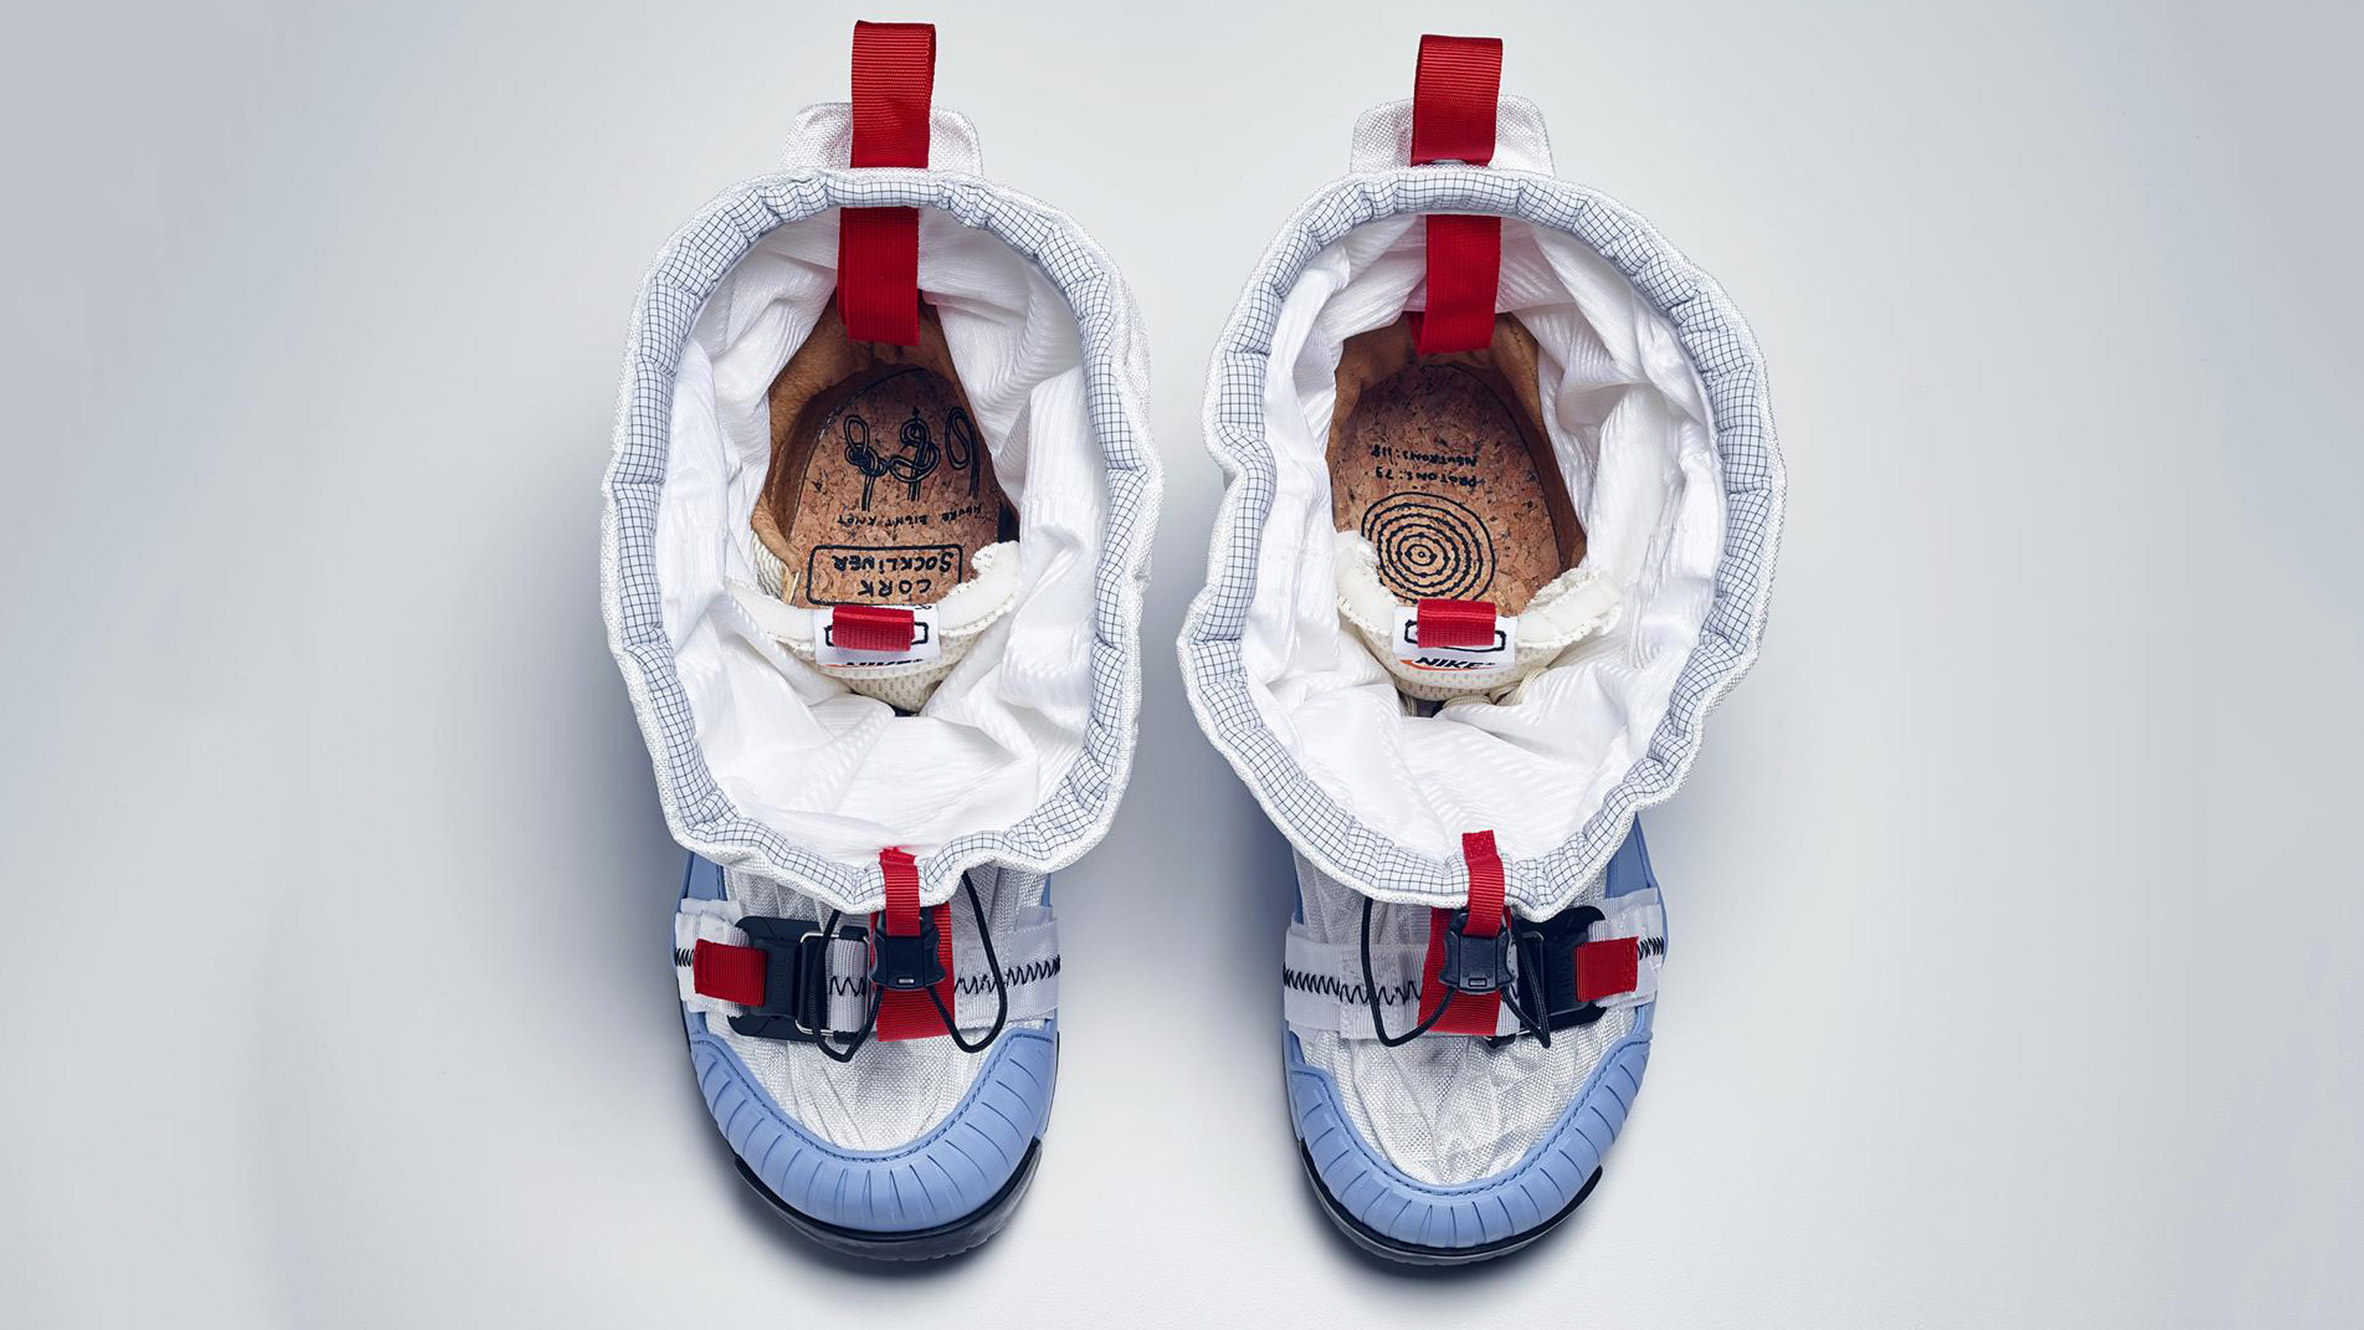 Manje kuk uzorak nike astronaut shoes 